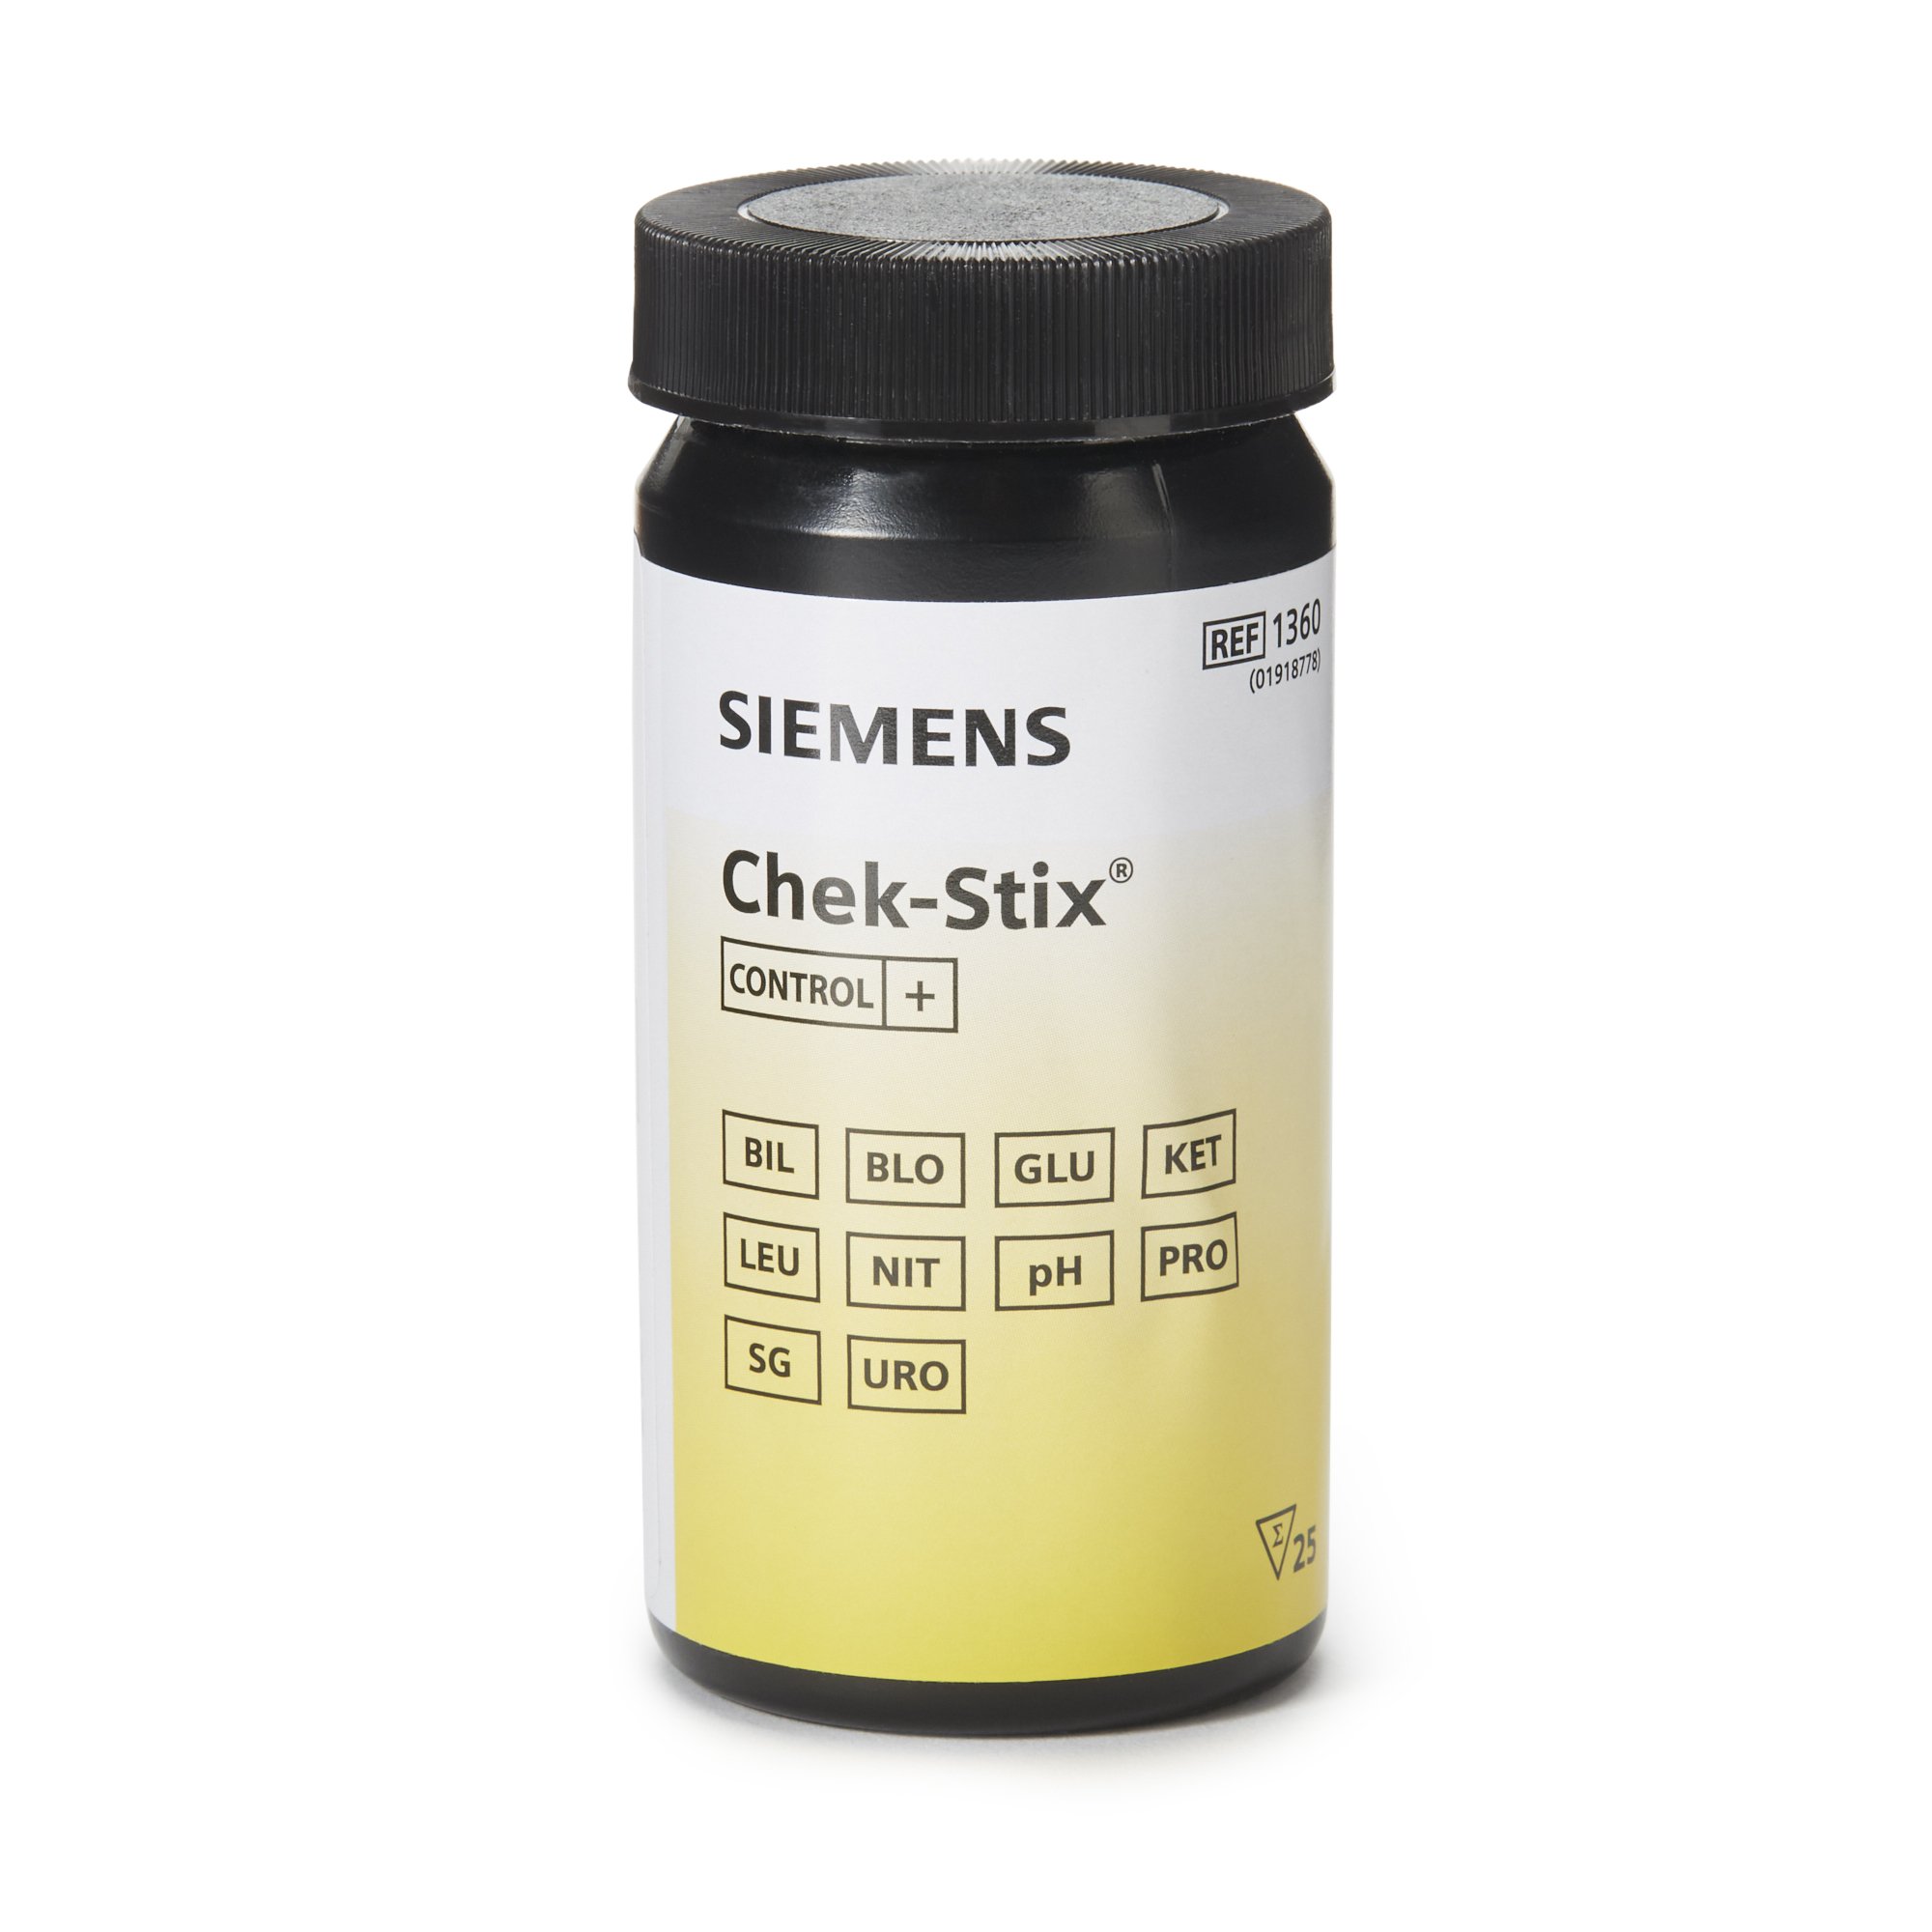 Chek-Stix Siemens Positive Control